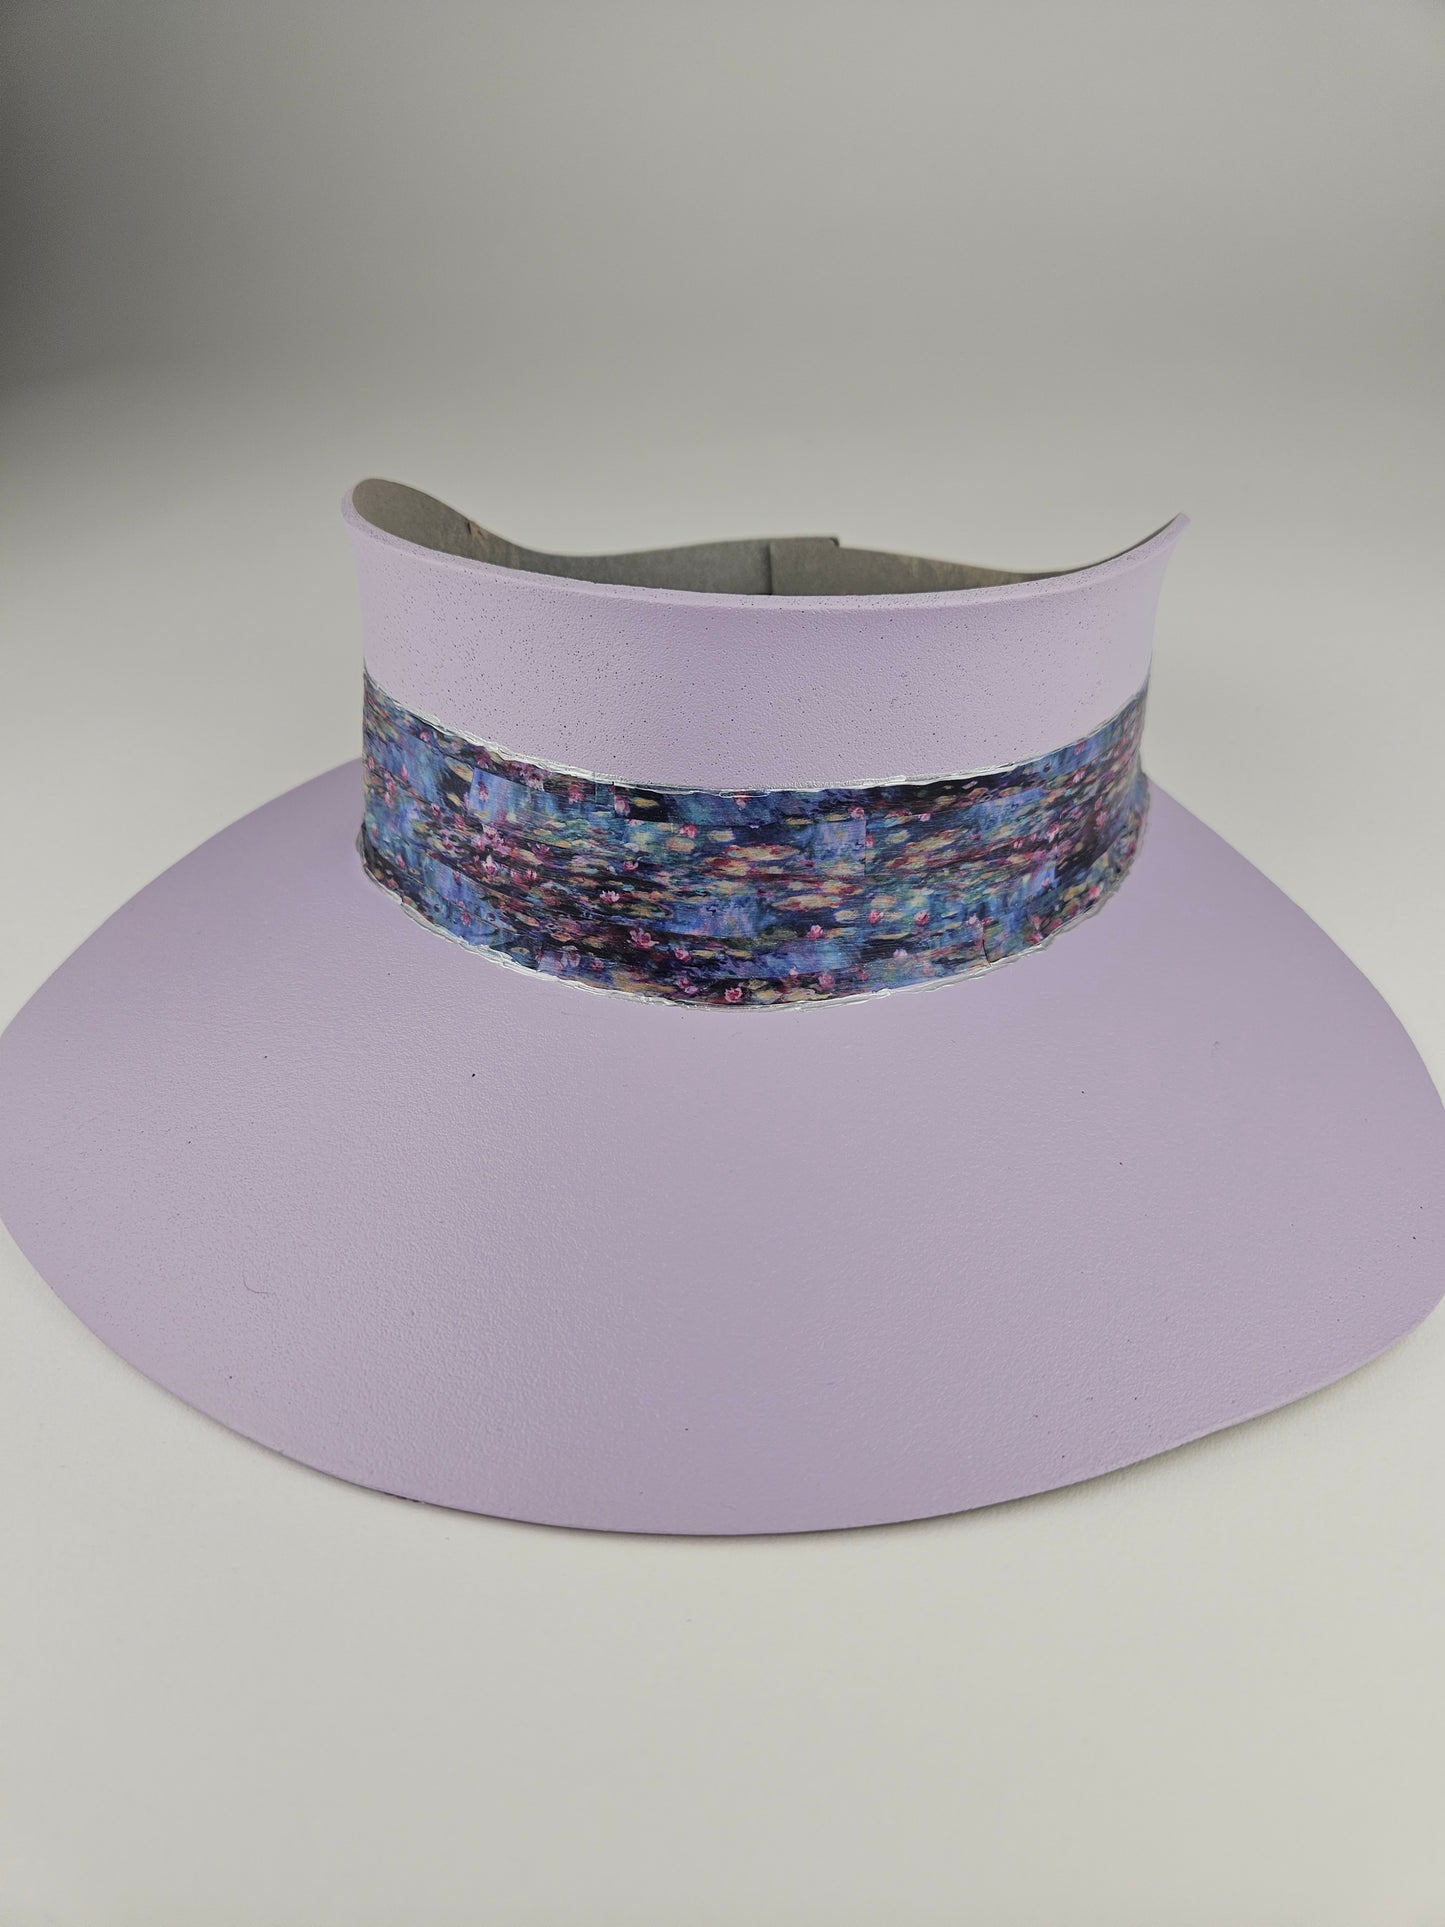 Tall Lilac Purple Audrey Sun Visor Hat with Elegant Multicolor Monet Style Band: 1950s, Walks, Brunch, Asian, Golf, Summer, Church, No Headache, Pool, Beach